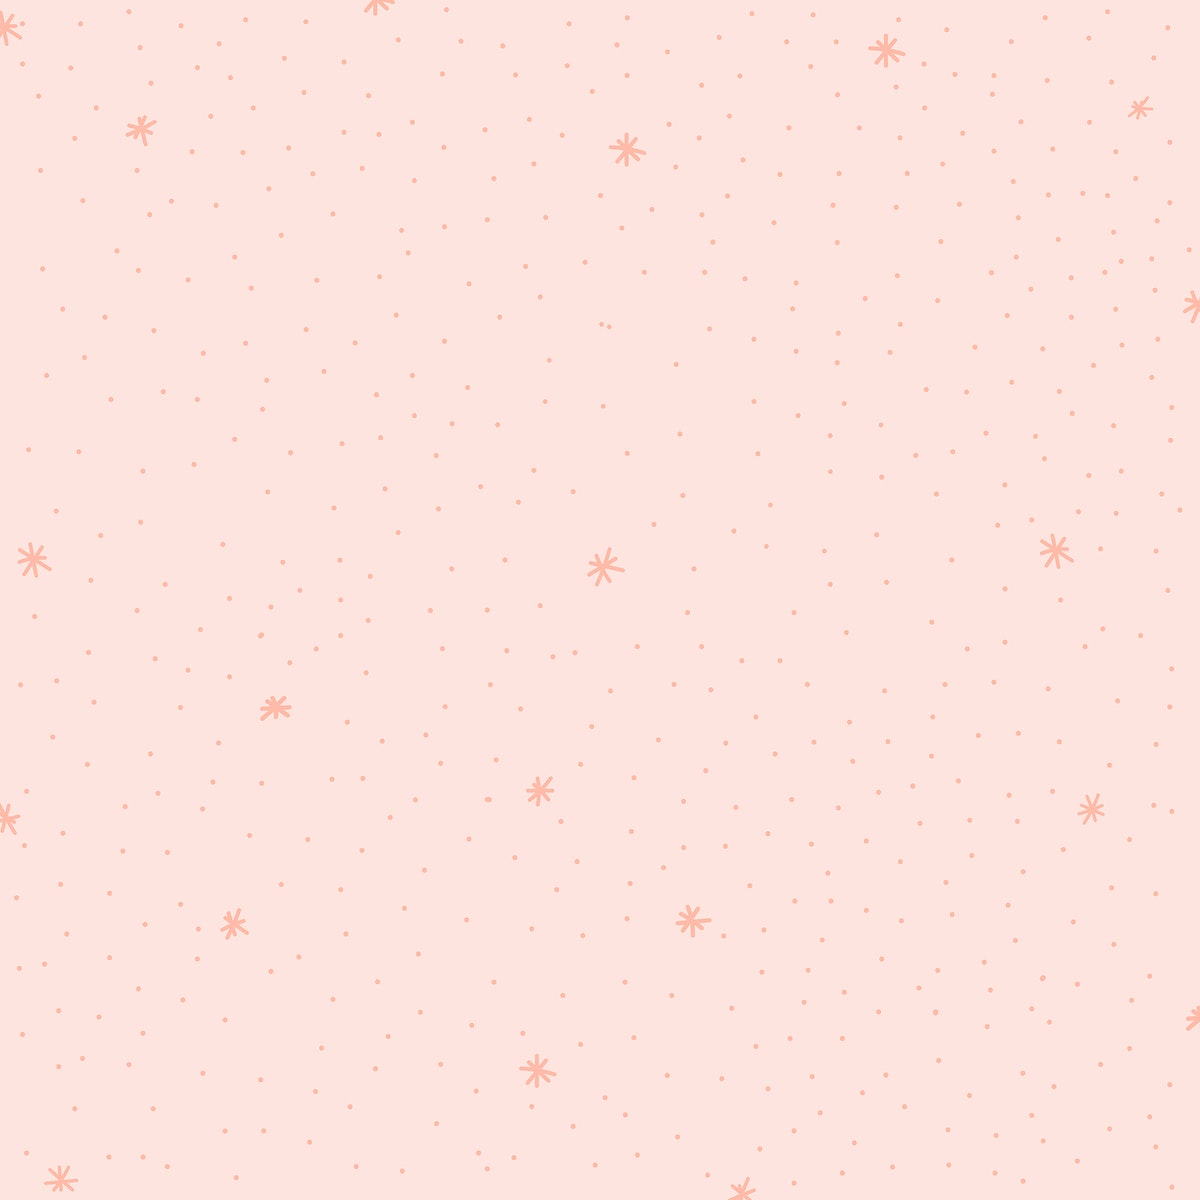 Minimal star pattern with pastel